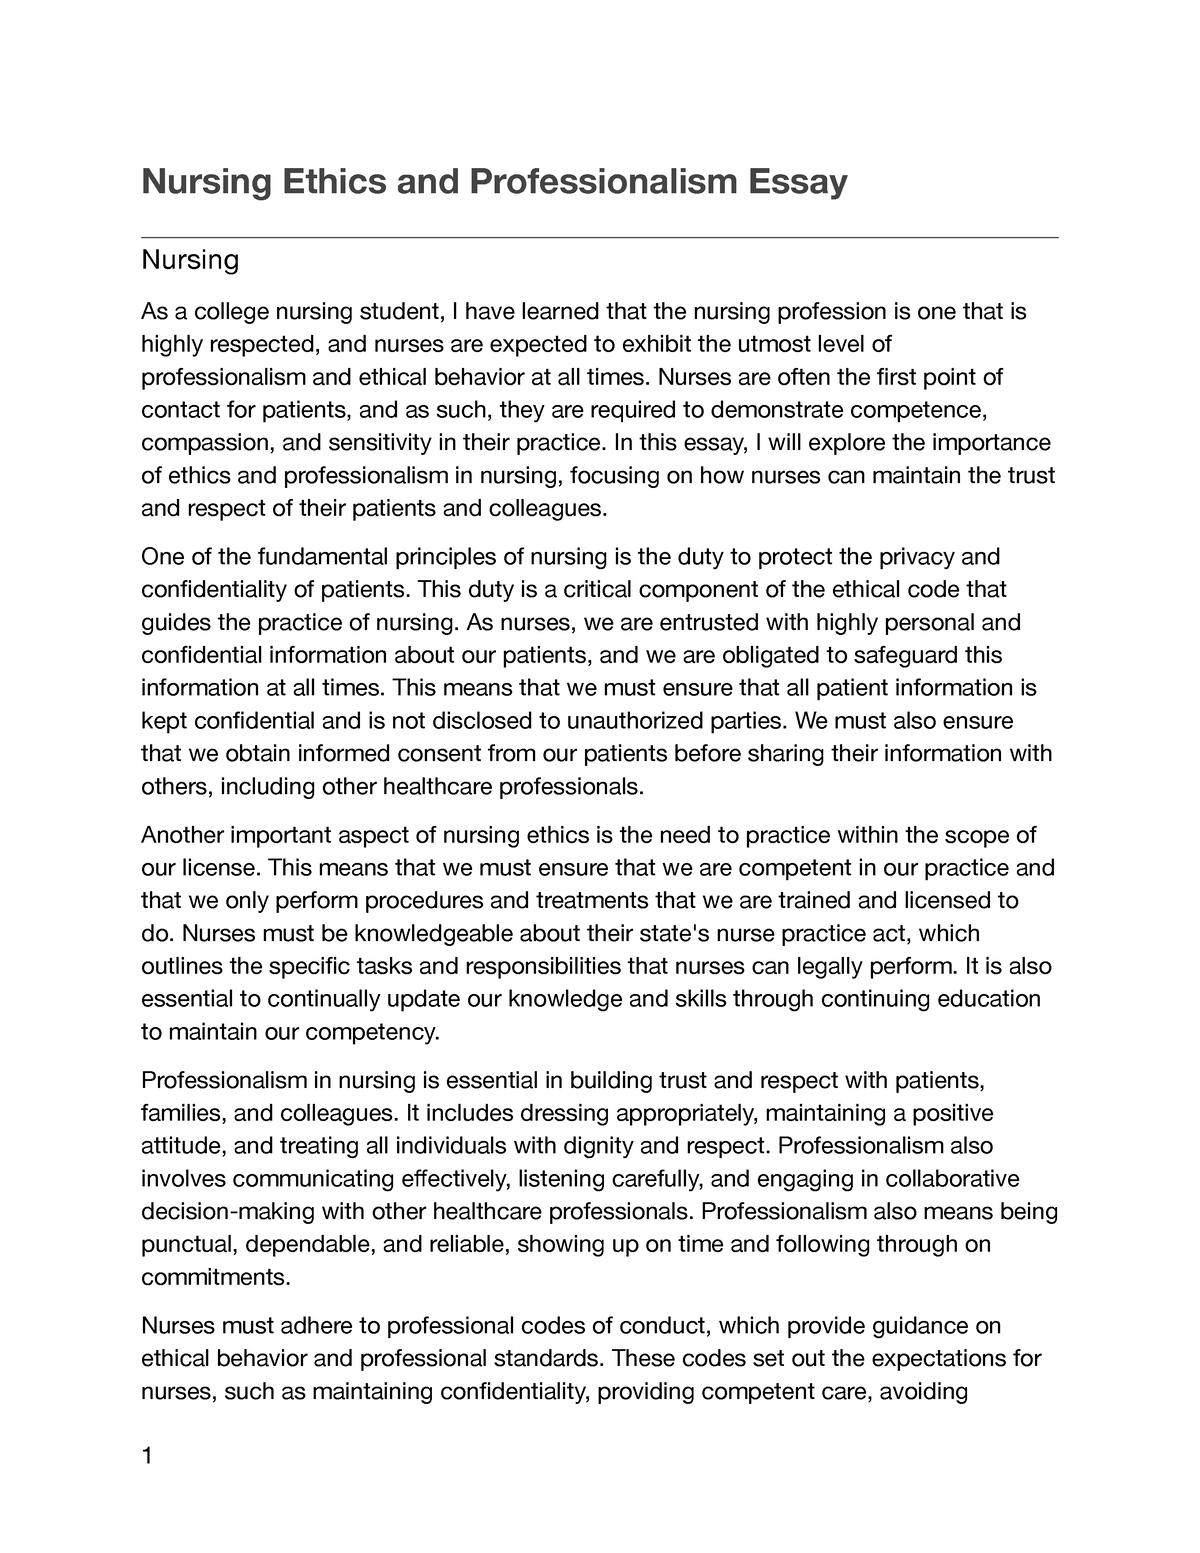 ethics and professionalism essay grade 12